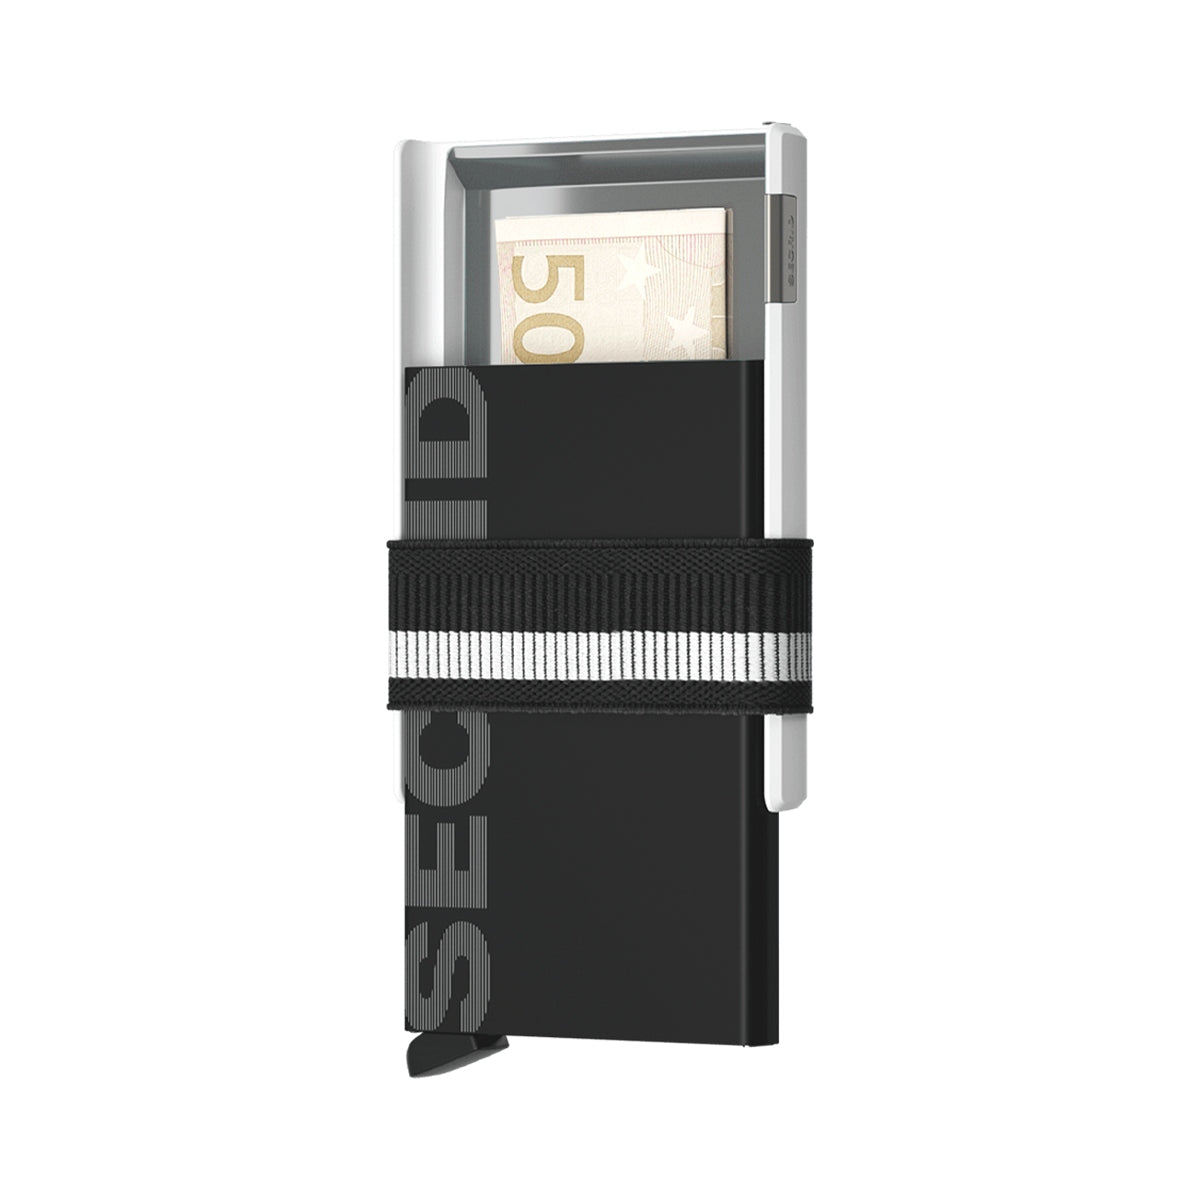 Secrid Cardslide CS-Monochrome-